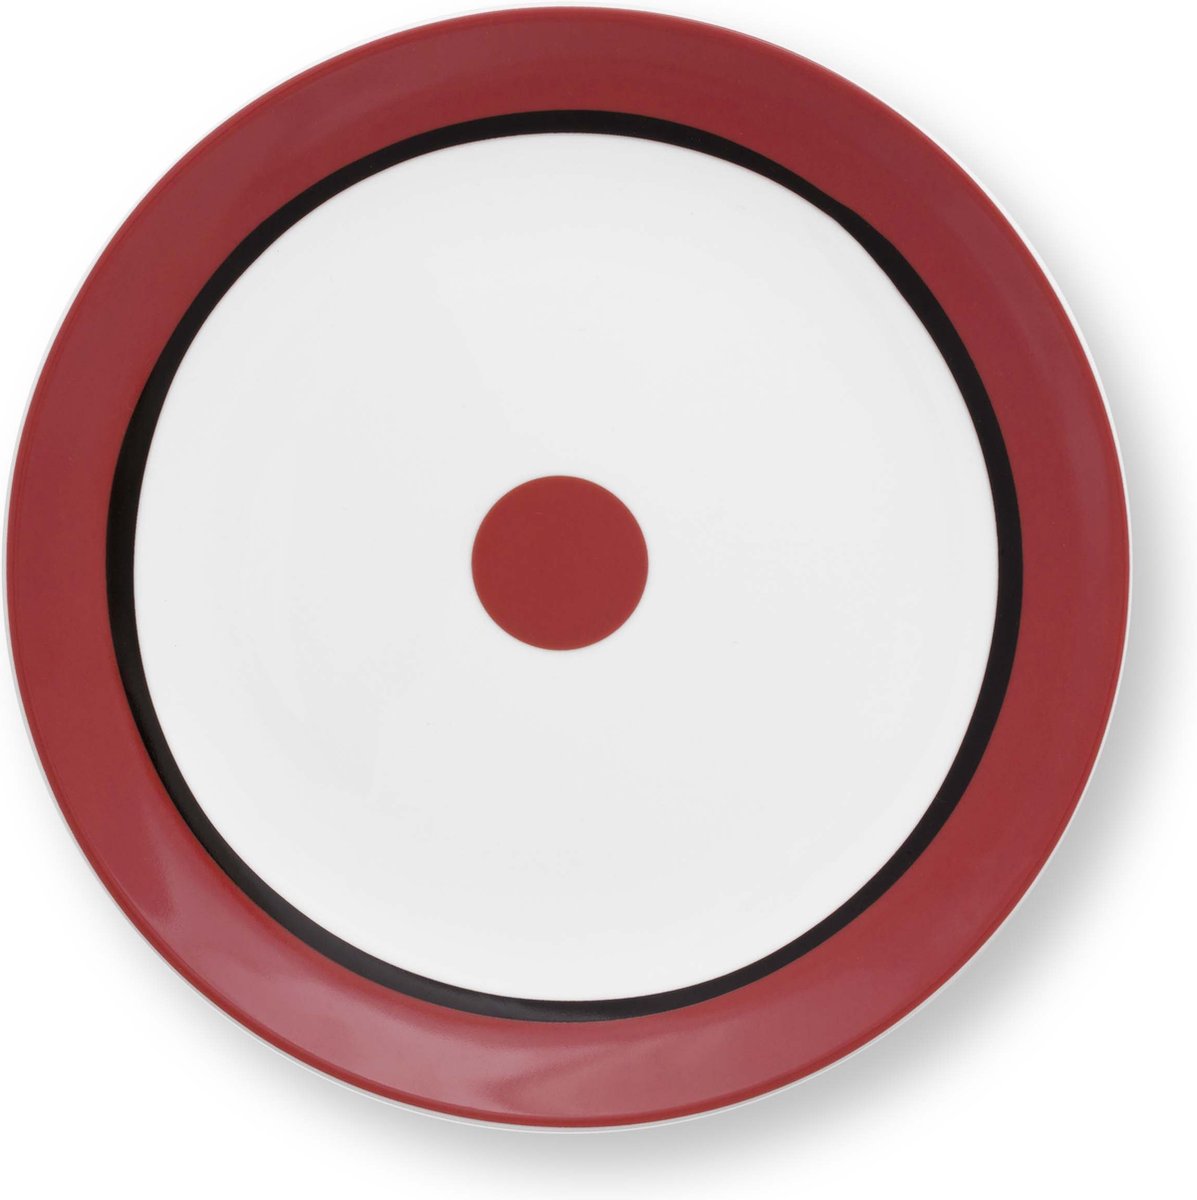 VT Wonen Circles Earth red - ontbijtbord - ⌀ 20cm - porselein - rood - servies